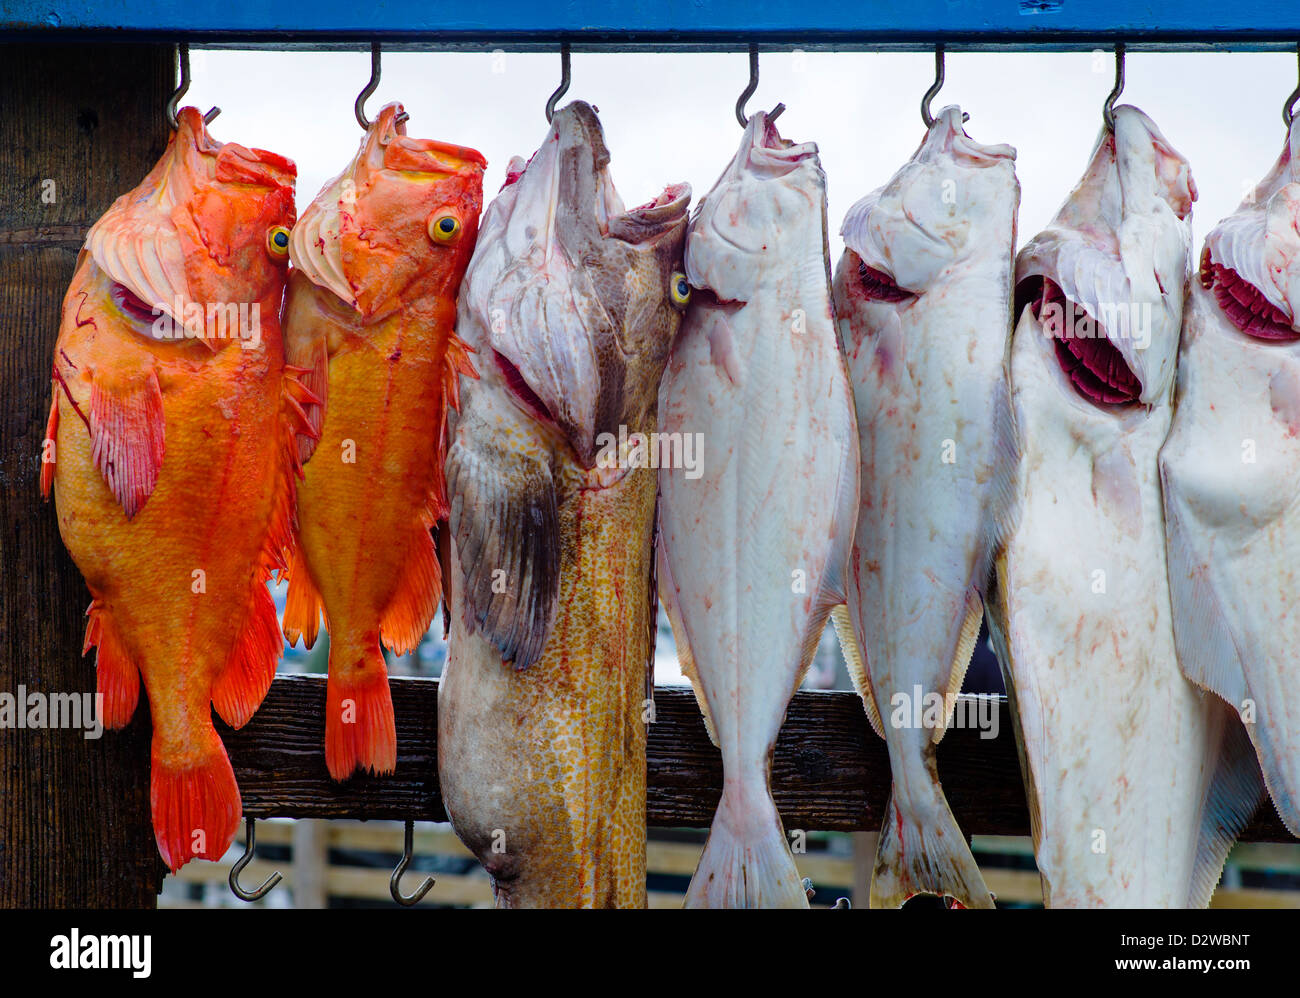 Charta-Angeln-Boot-Kapitäne hängen den Fang des Tages für Kunden Fotos, Seward, Alaska, USA Stockfoto